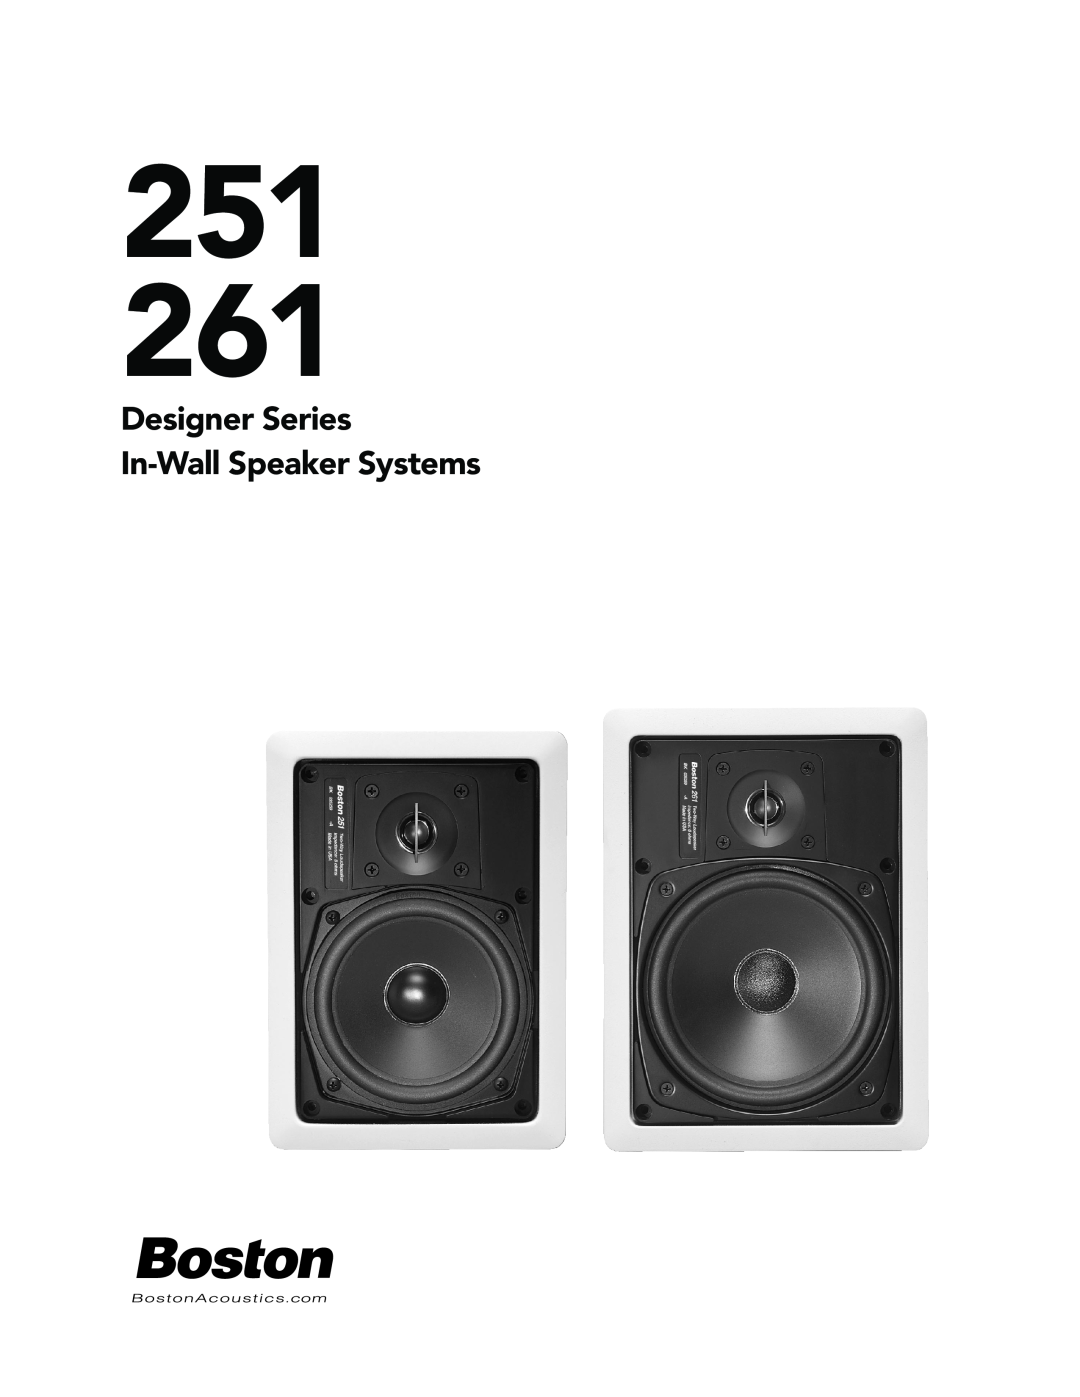 Boston Acoustics 261 manual Designer Series In-WallSpeaker Systems, 251 